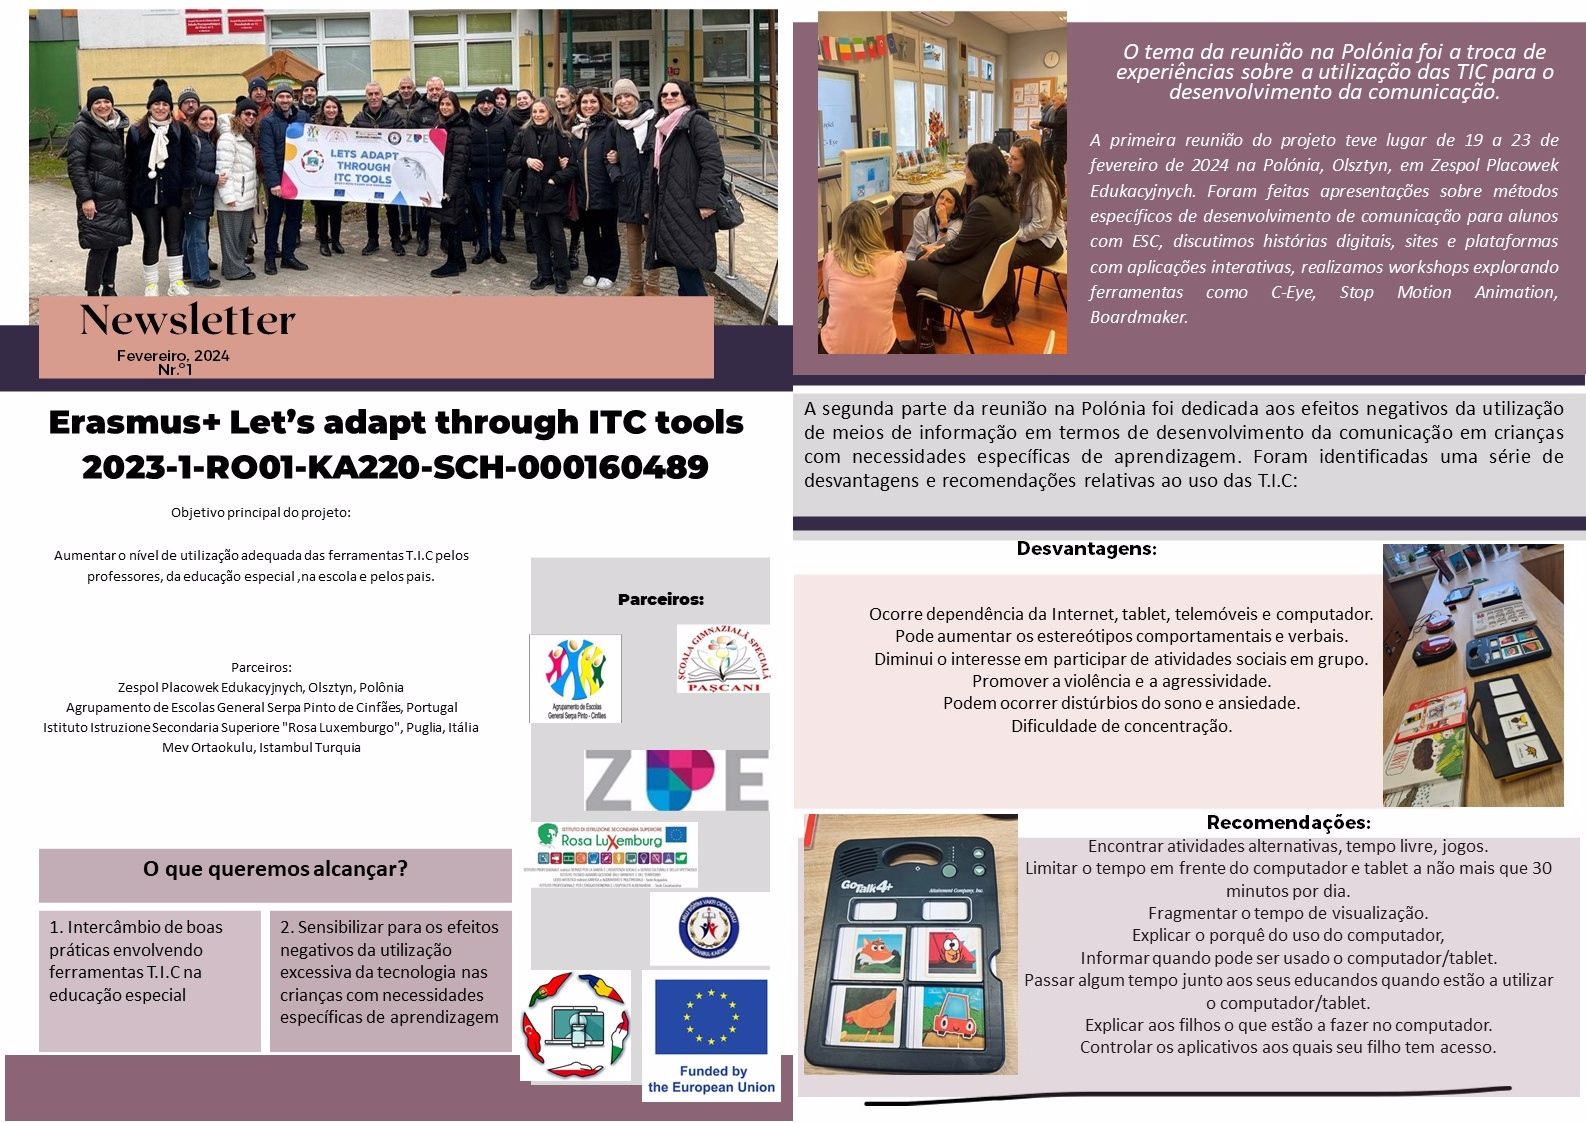 Projeto Erasmus+ Let's adapt through ITC tools